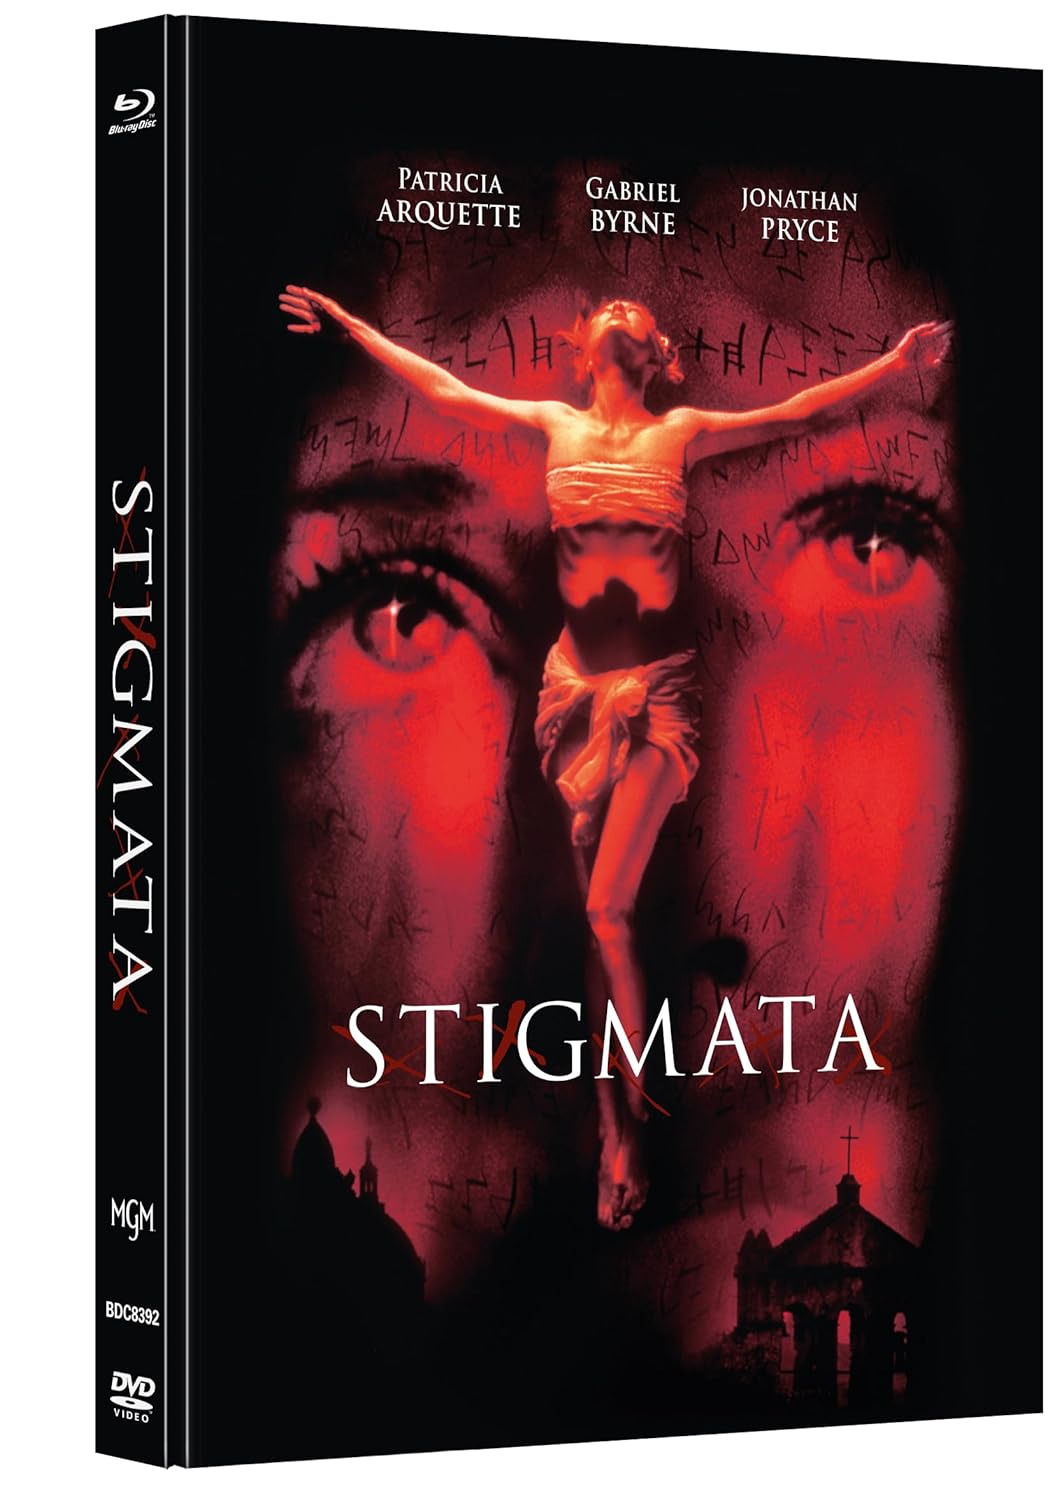 STIGMATA (LIMITED EDITION) BLU-RAY/DVD MEDIABOOK